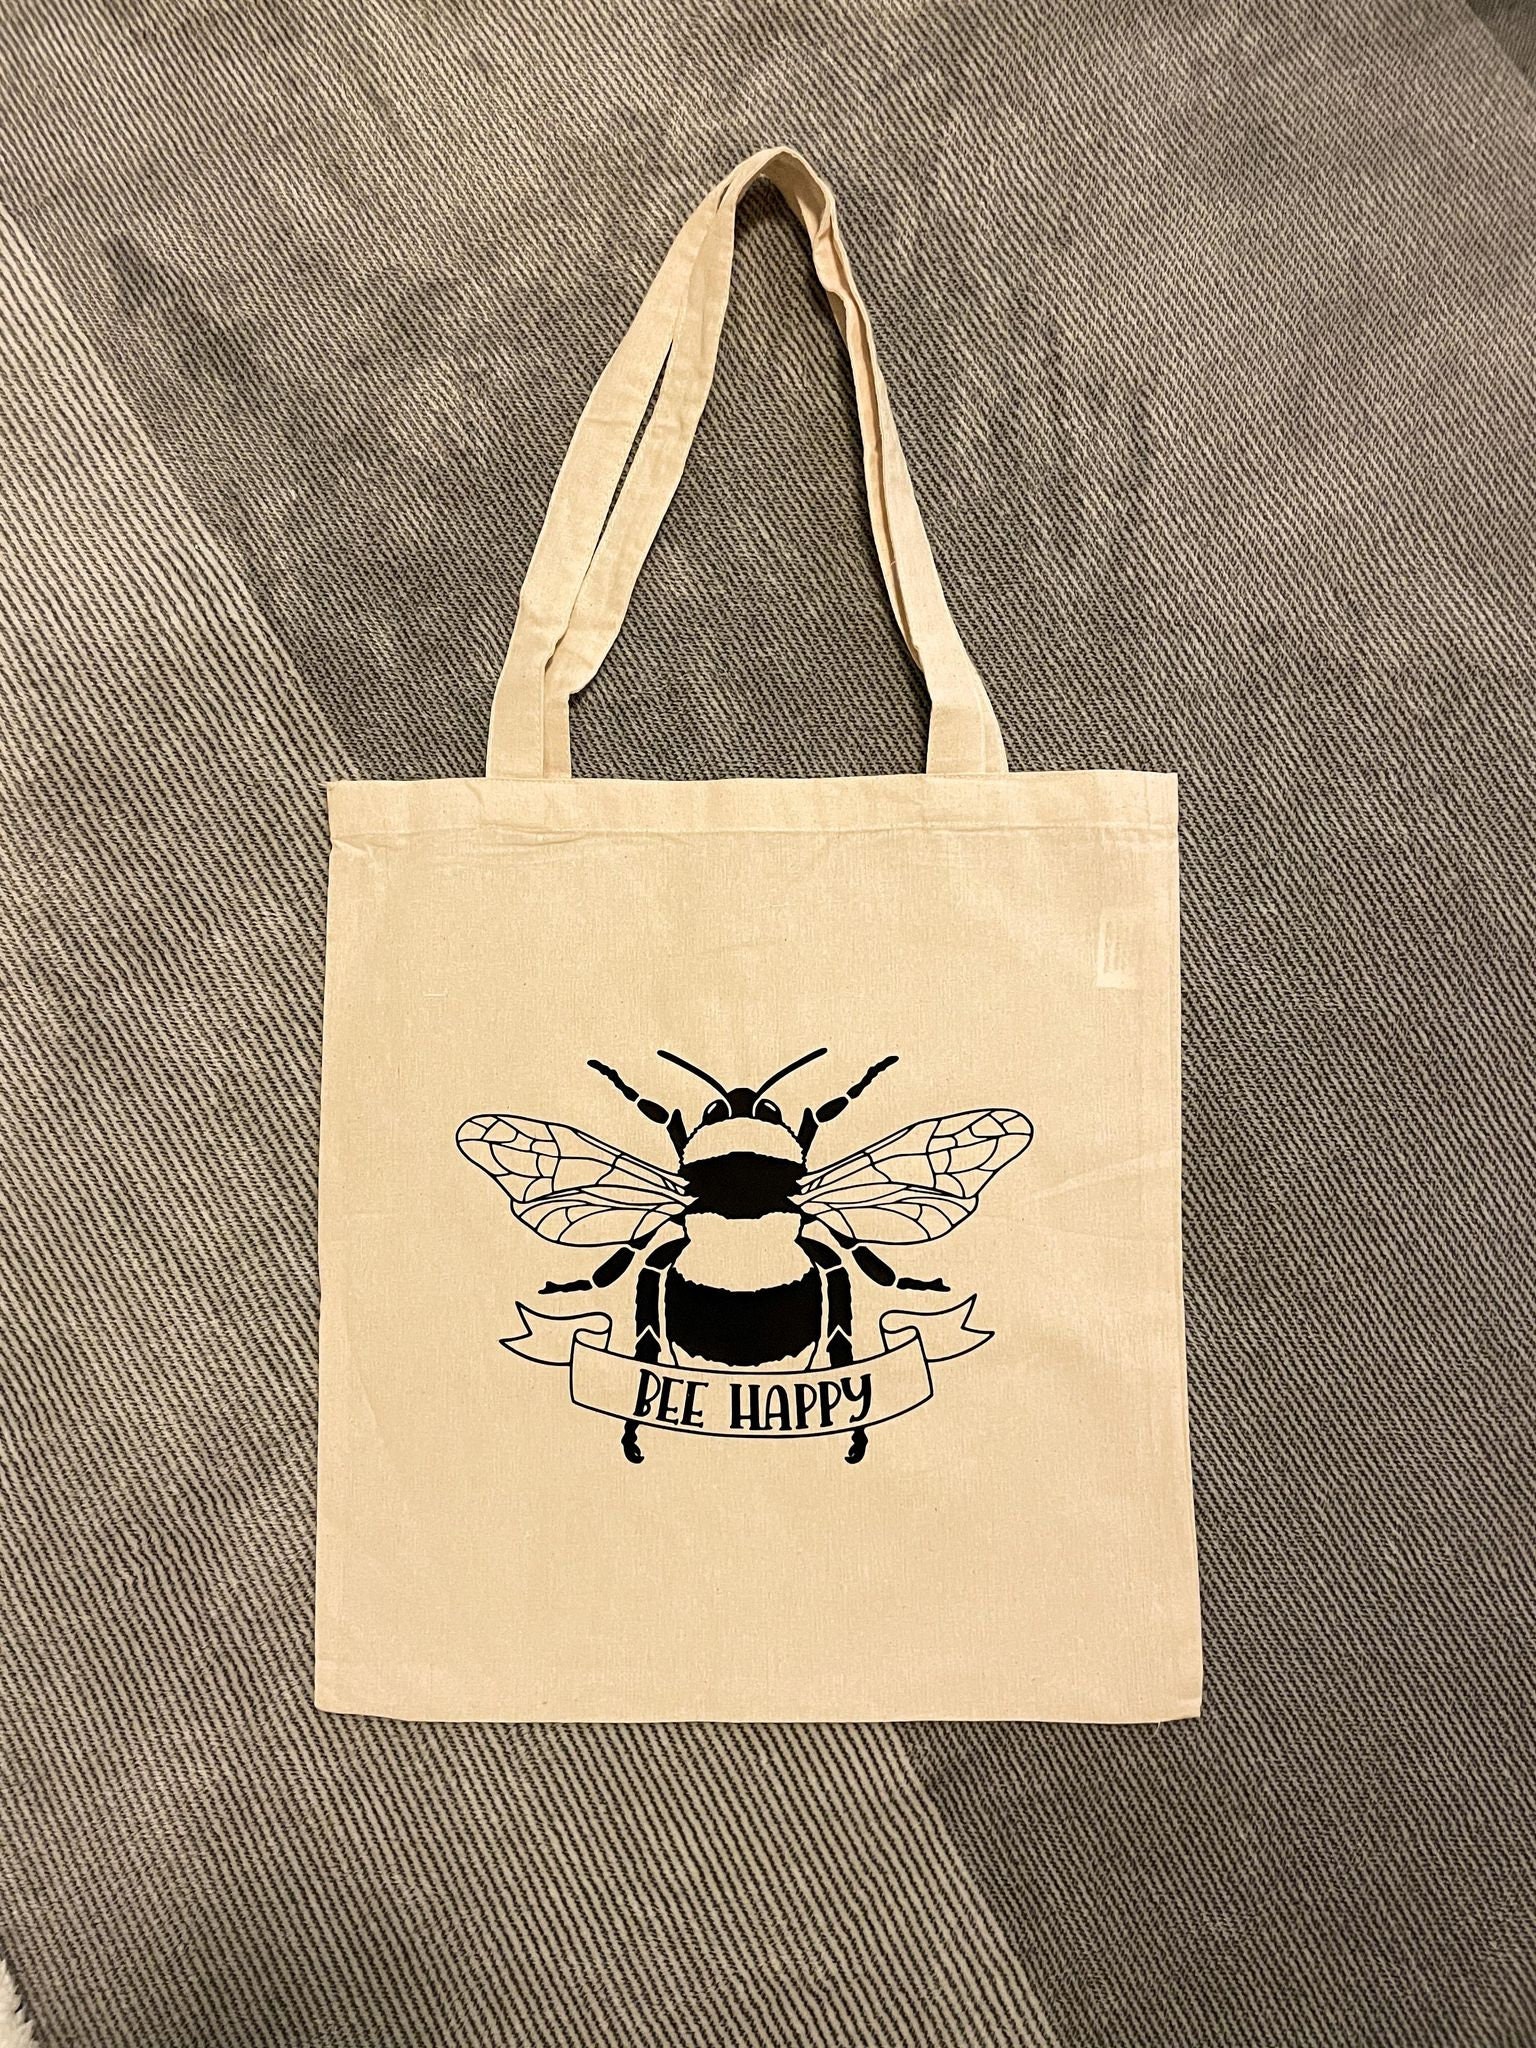 Bee Happy Bag Bumblebee Tote Tote Bag Eco Friendly Tote | Etsy